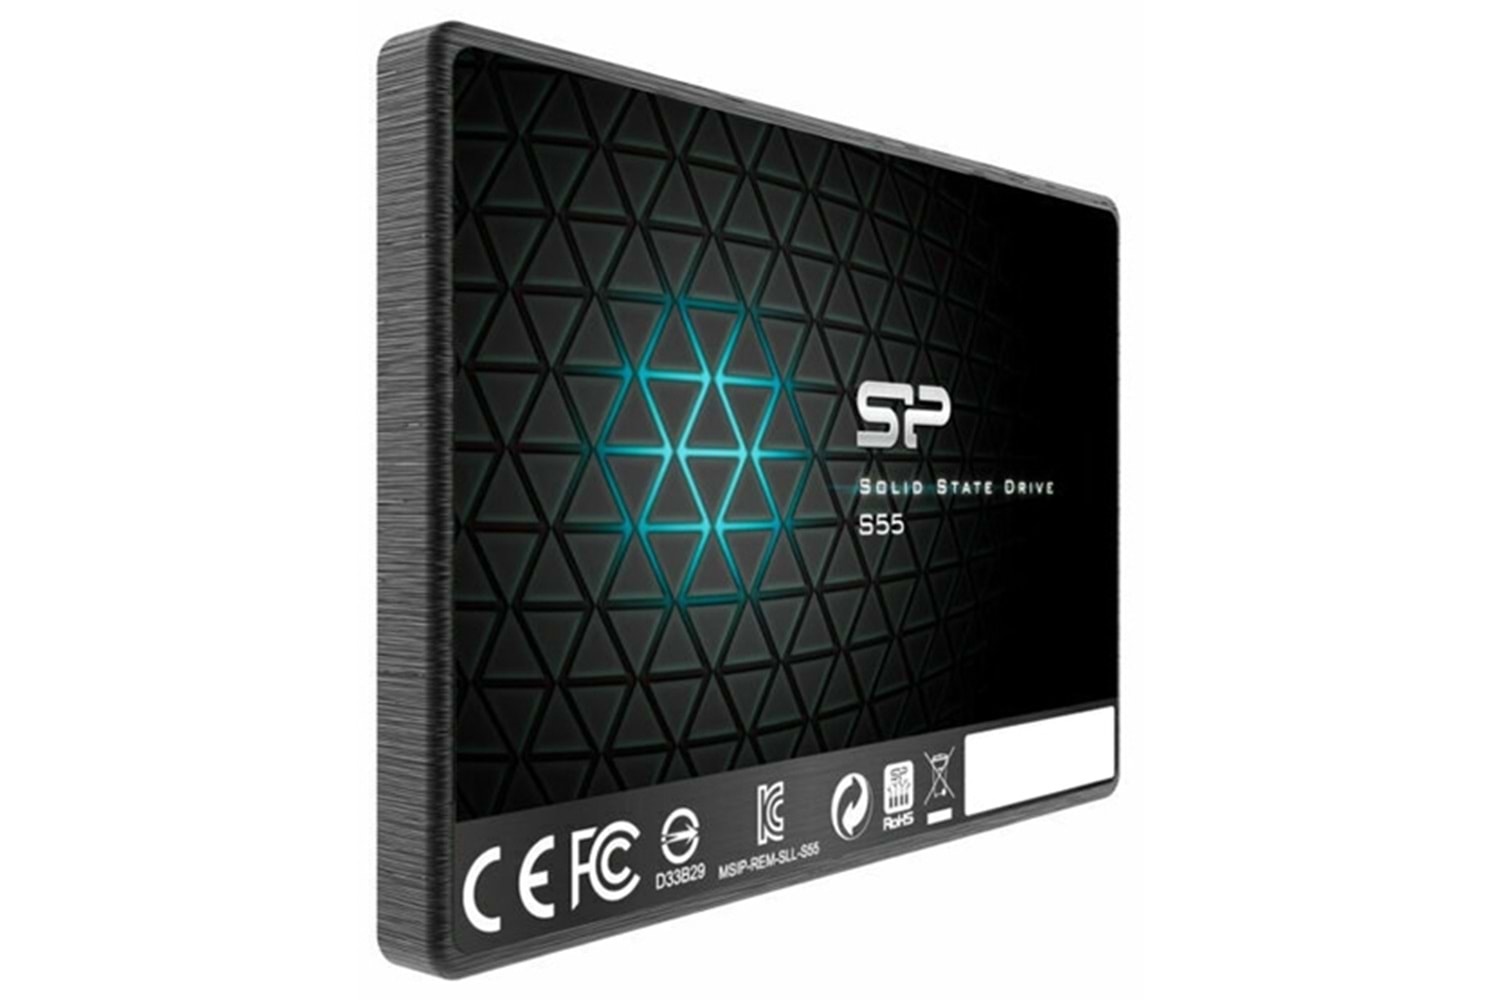 Silicon Power Slim S55 960GB 2.5